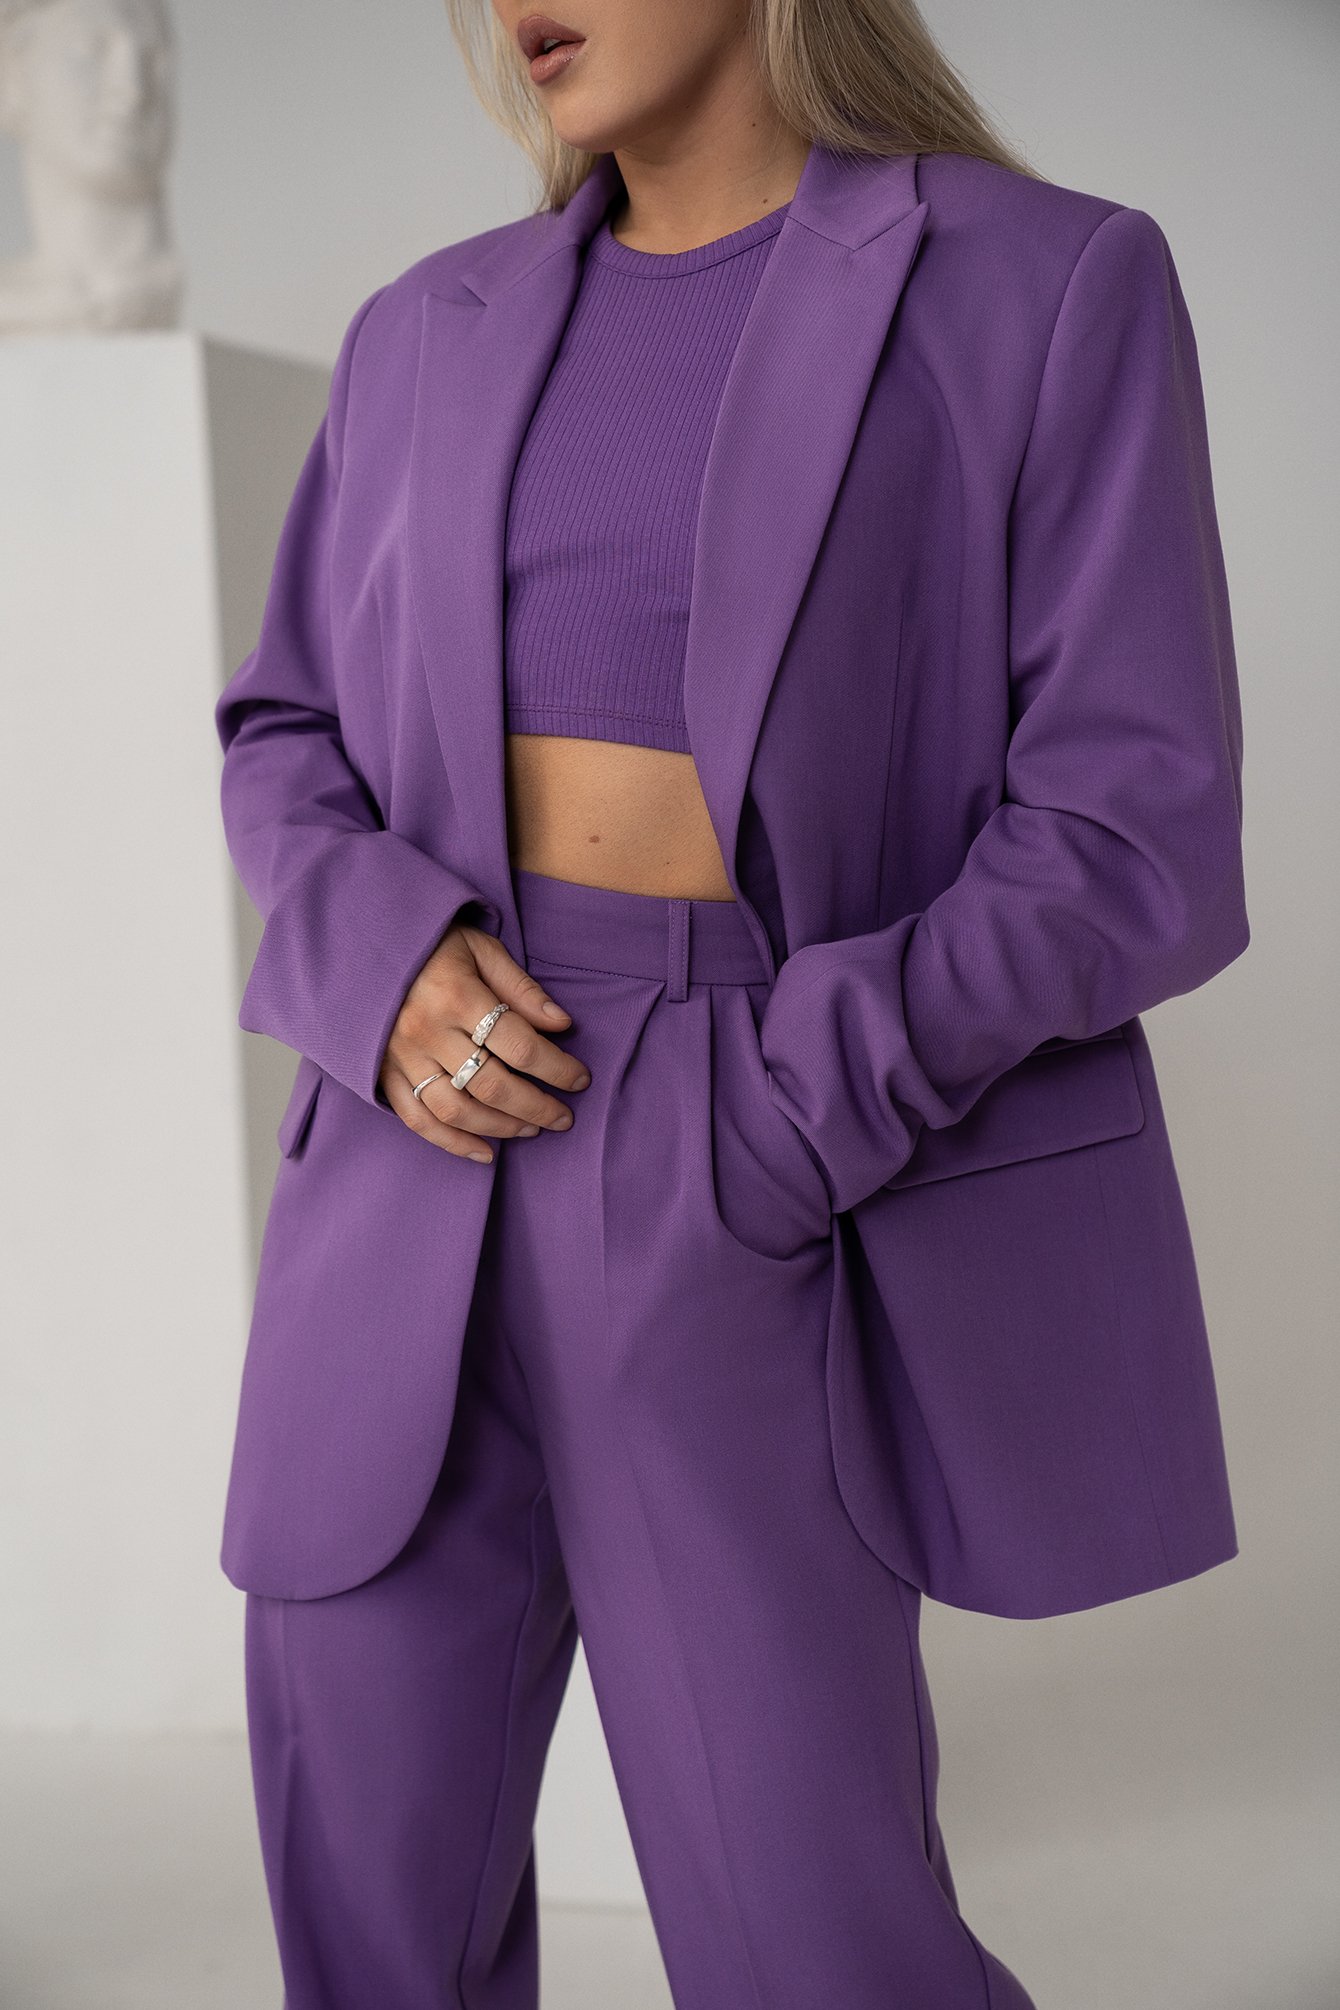 Angelica Blick X Na-kd Marked Shoulder Oversized Blazer - Purple